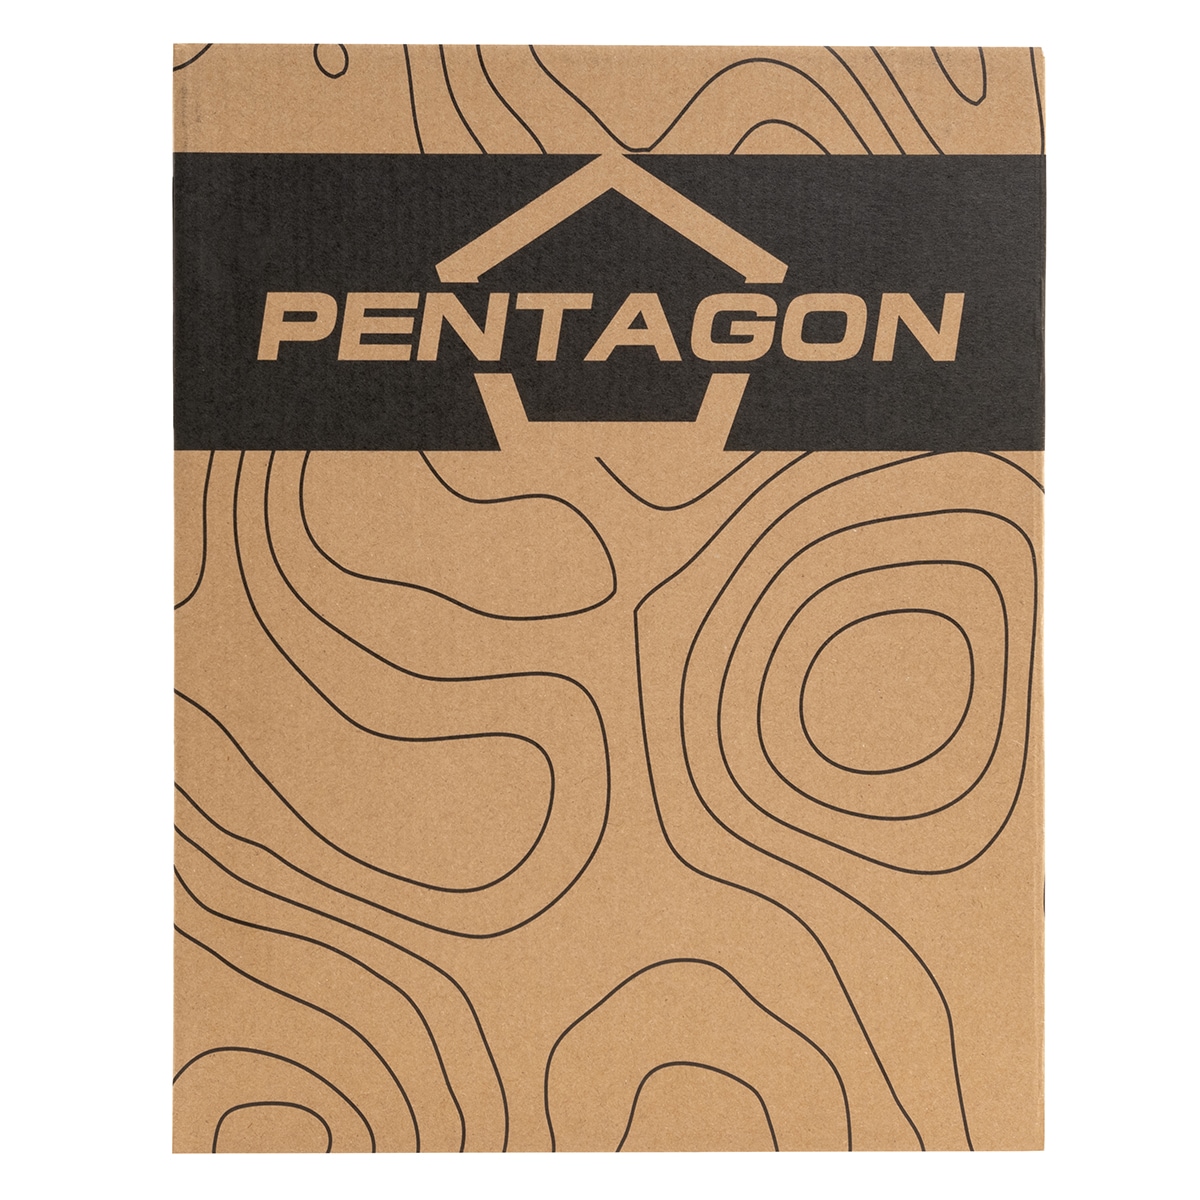 Buty taktyczne Pentagon Hybrid Tactical Boots 2.0 - Coyote